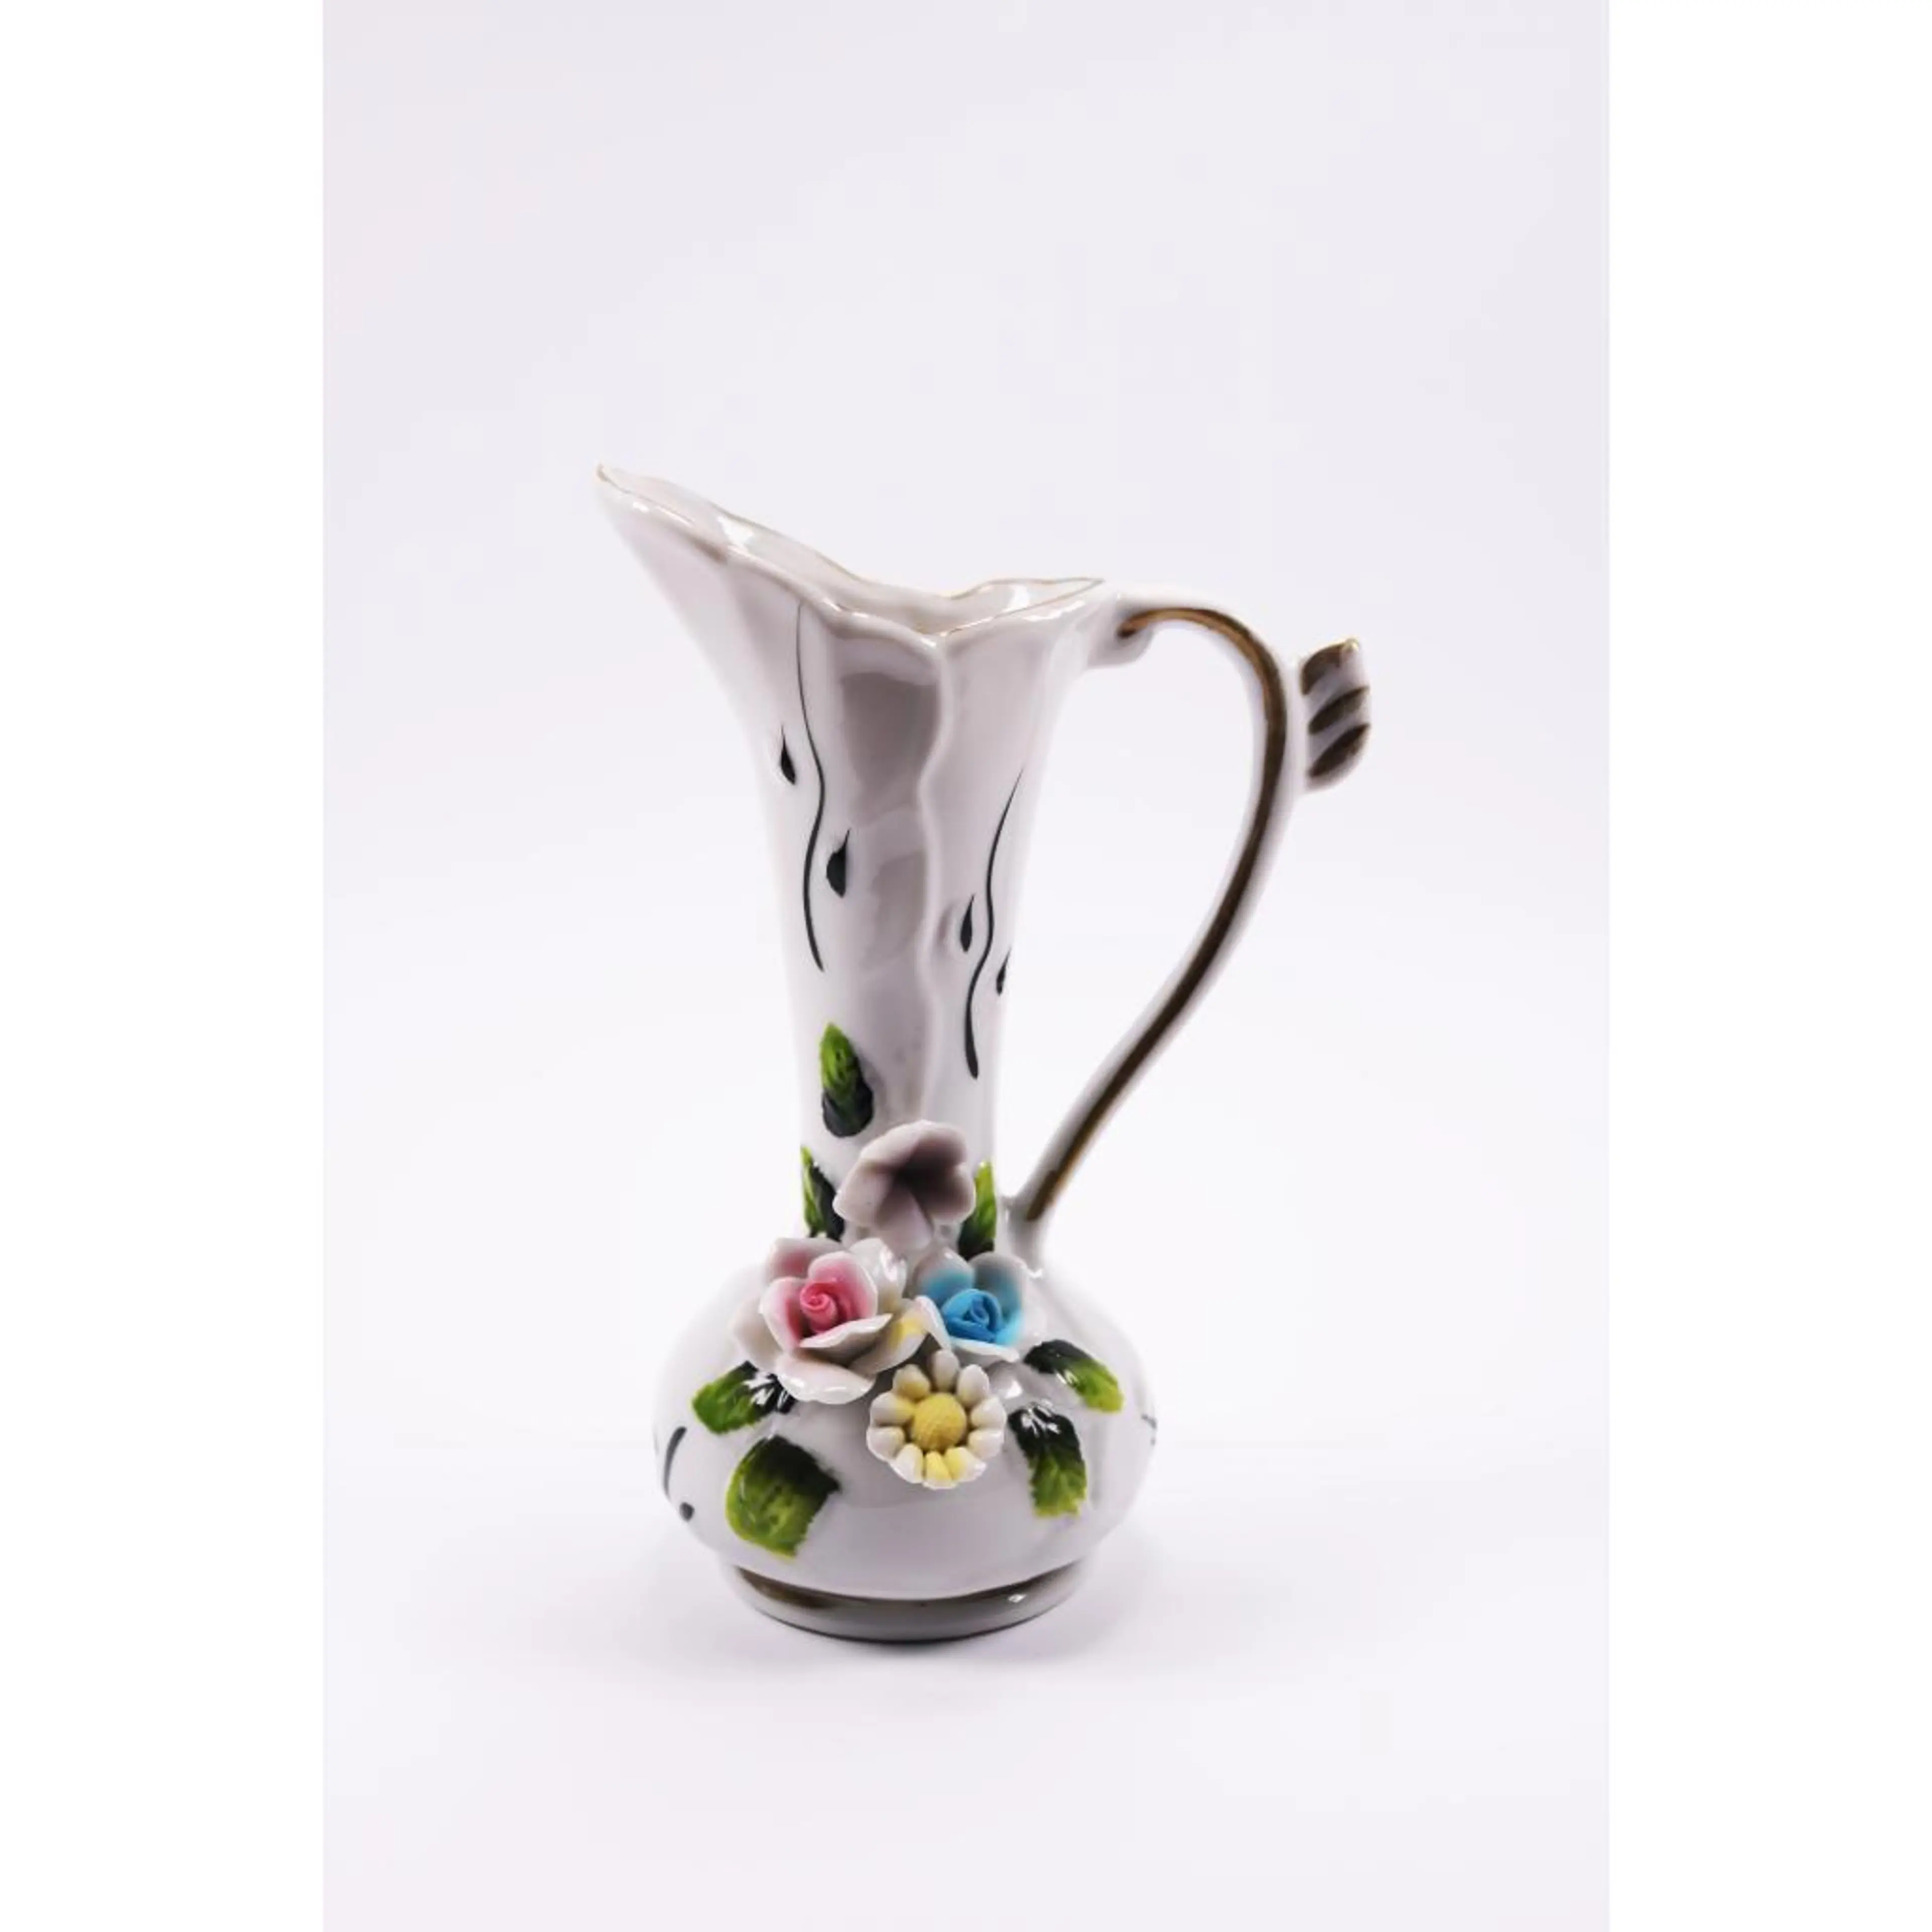 Vintage Italian Capodimonte Decorative Floral Pitcher Vase